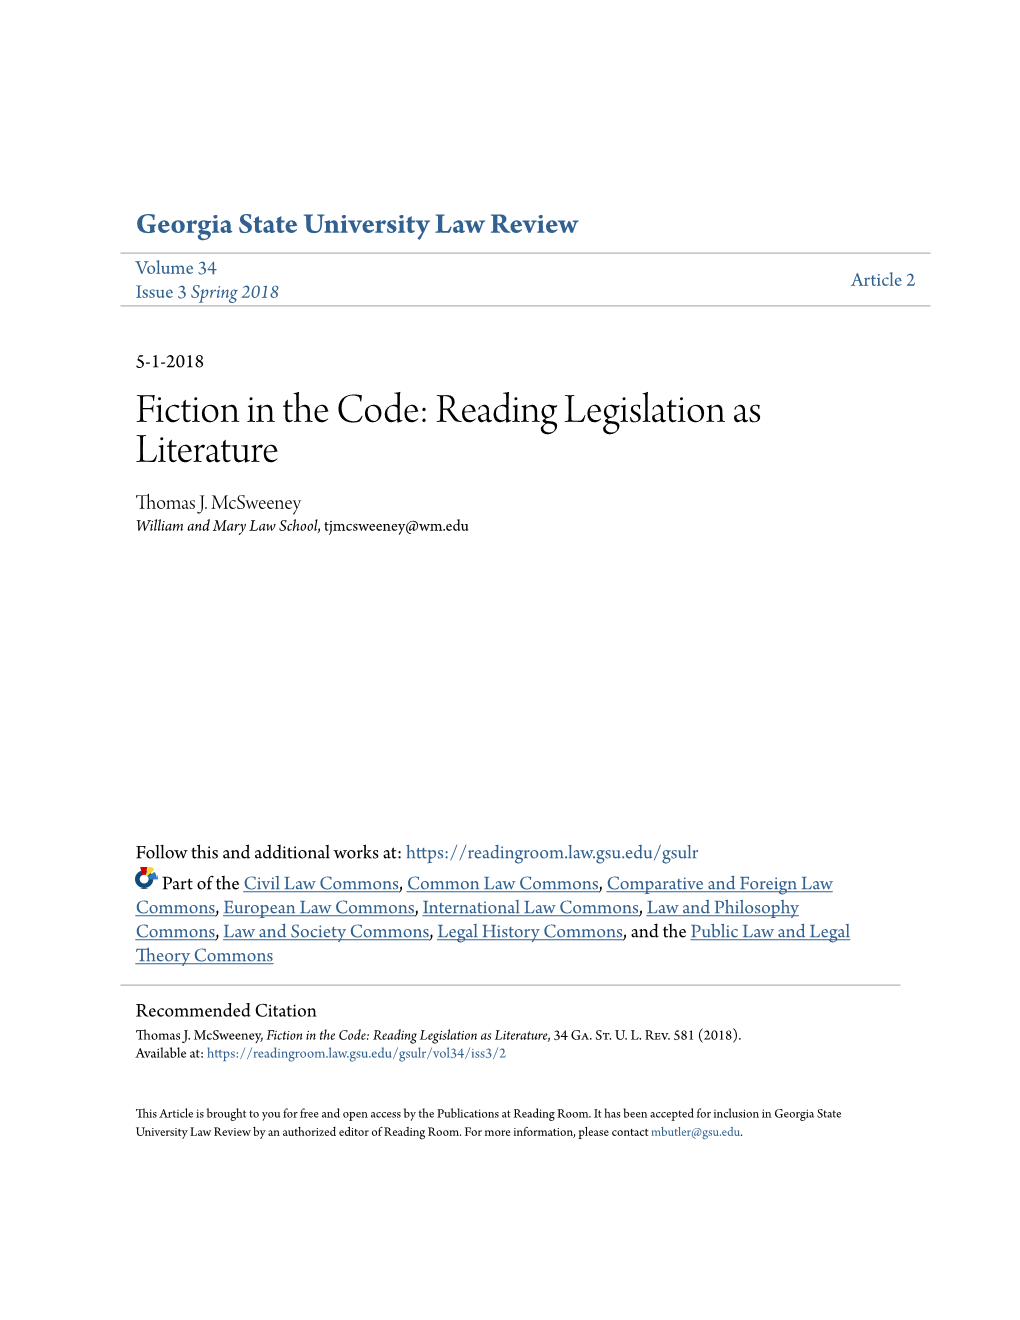 Fiction in the Code: Reading Legislation As Literature Thomas J